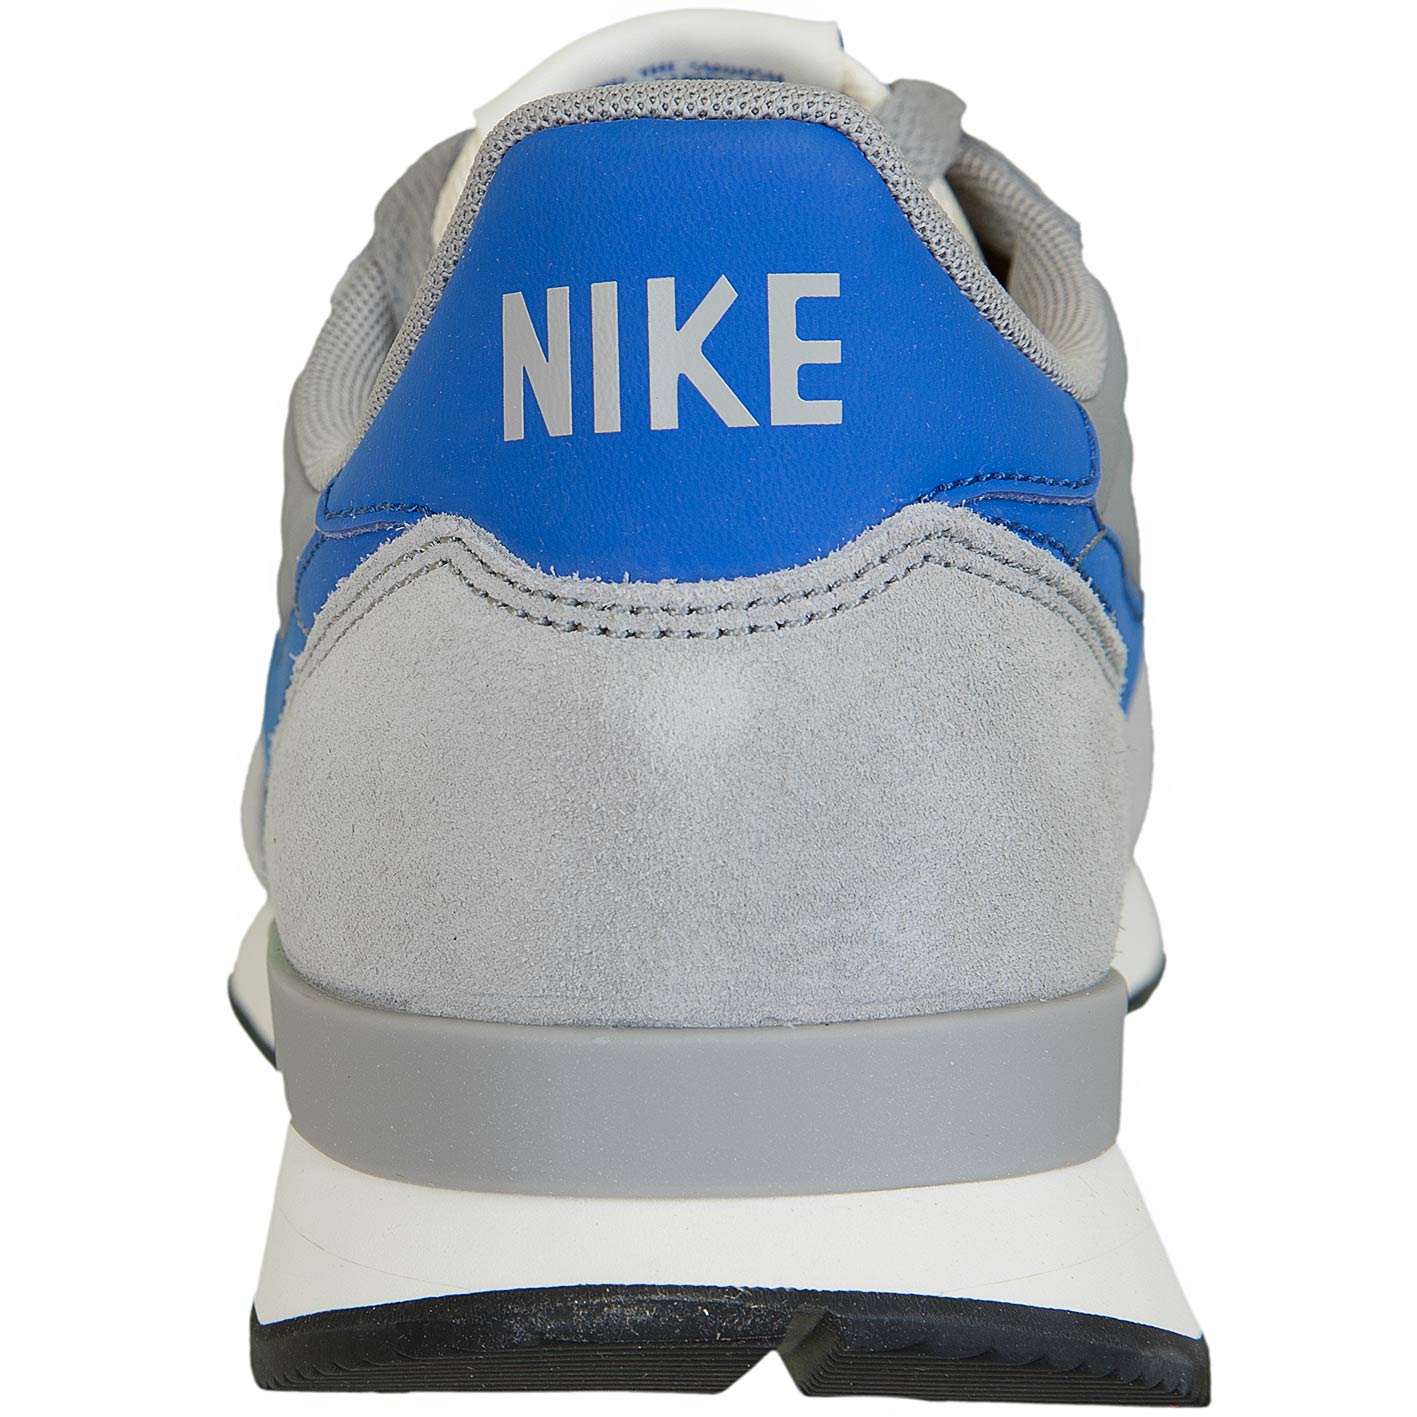 ☆ Nike Sneaker Internationalist silber/blau - hier bestellen!